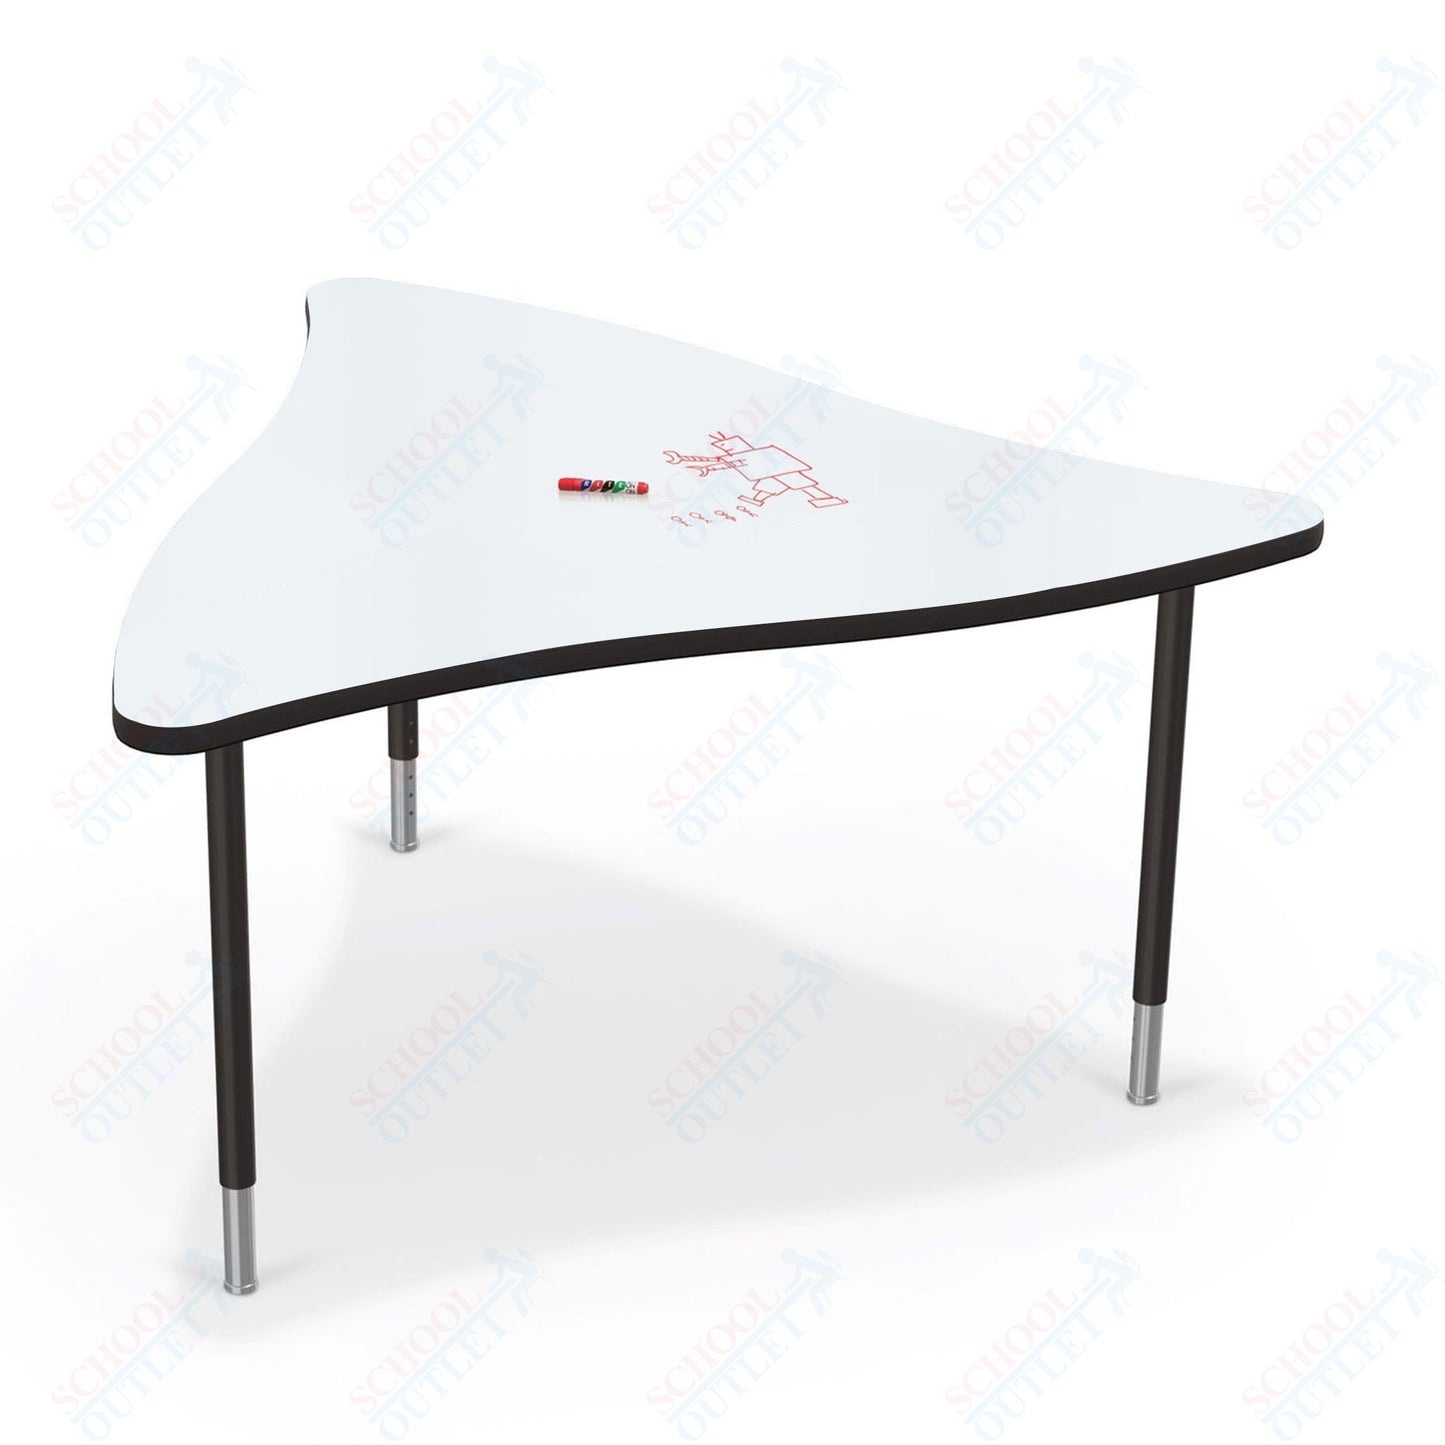 Mooreco Creator Configurable Tables - Triangle - Black Edgeband - Black Legs (Mooreco 1633K1)